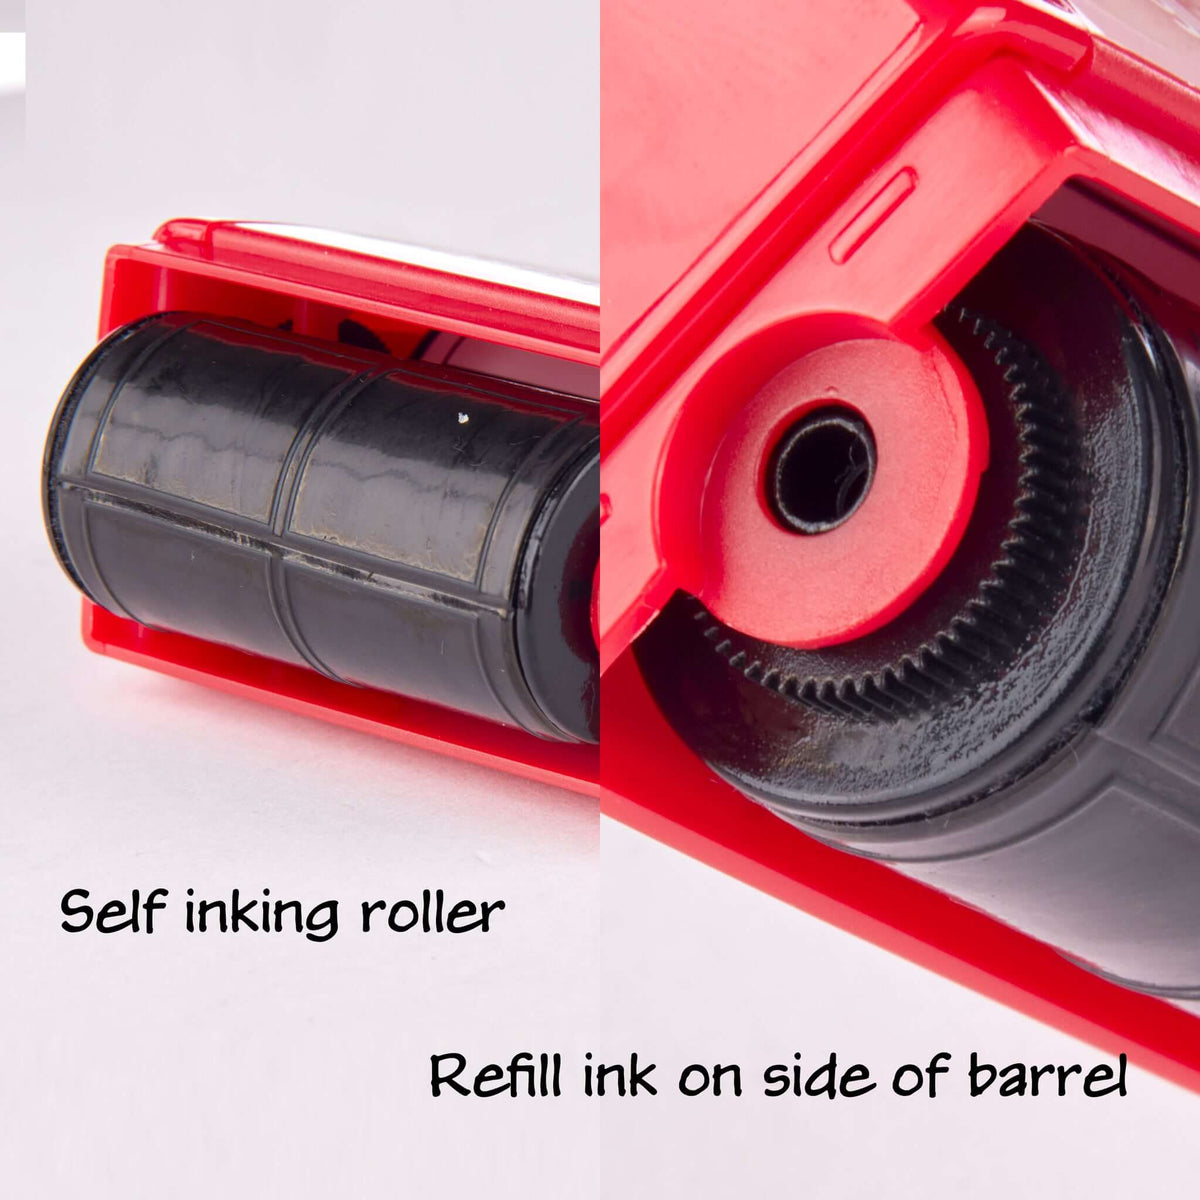 Self Inking Roller Refill Ink on side of barrel